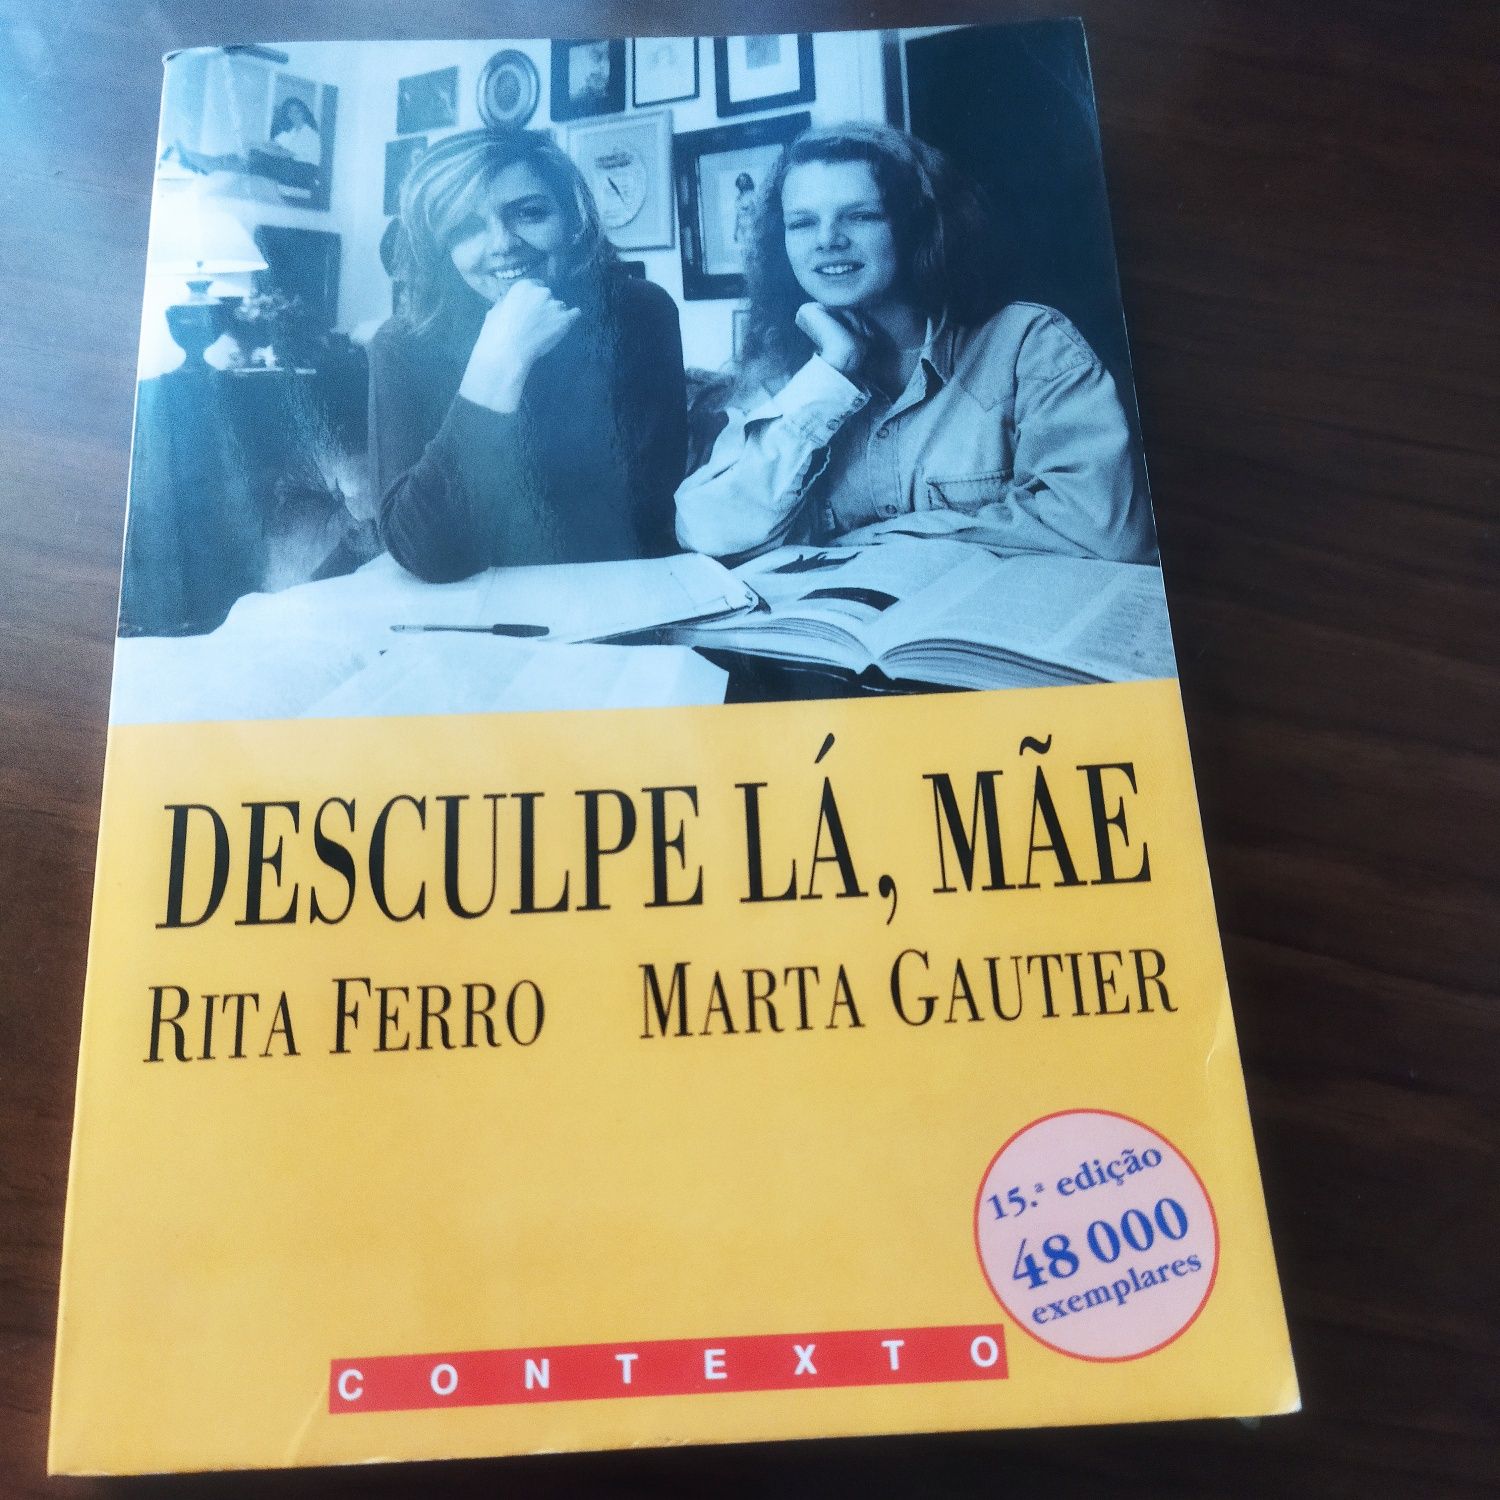 Desculpe lá, Mãe de Rita Ferro e Marta Gautier